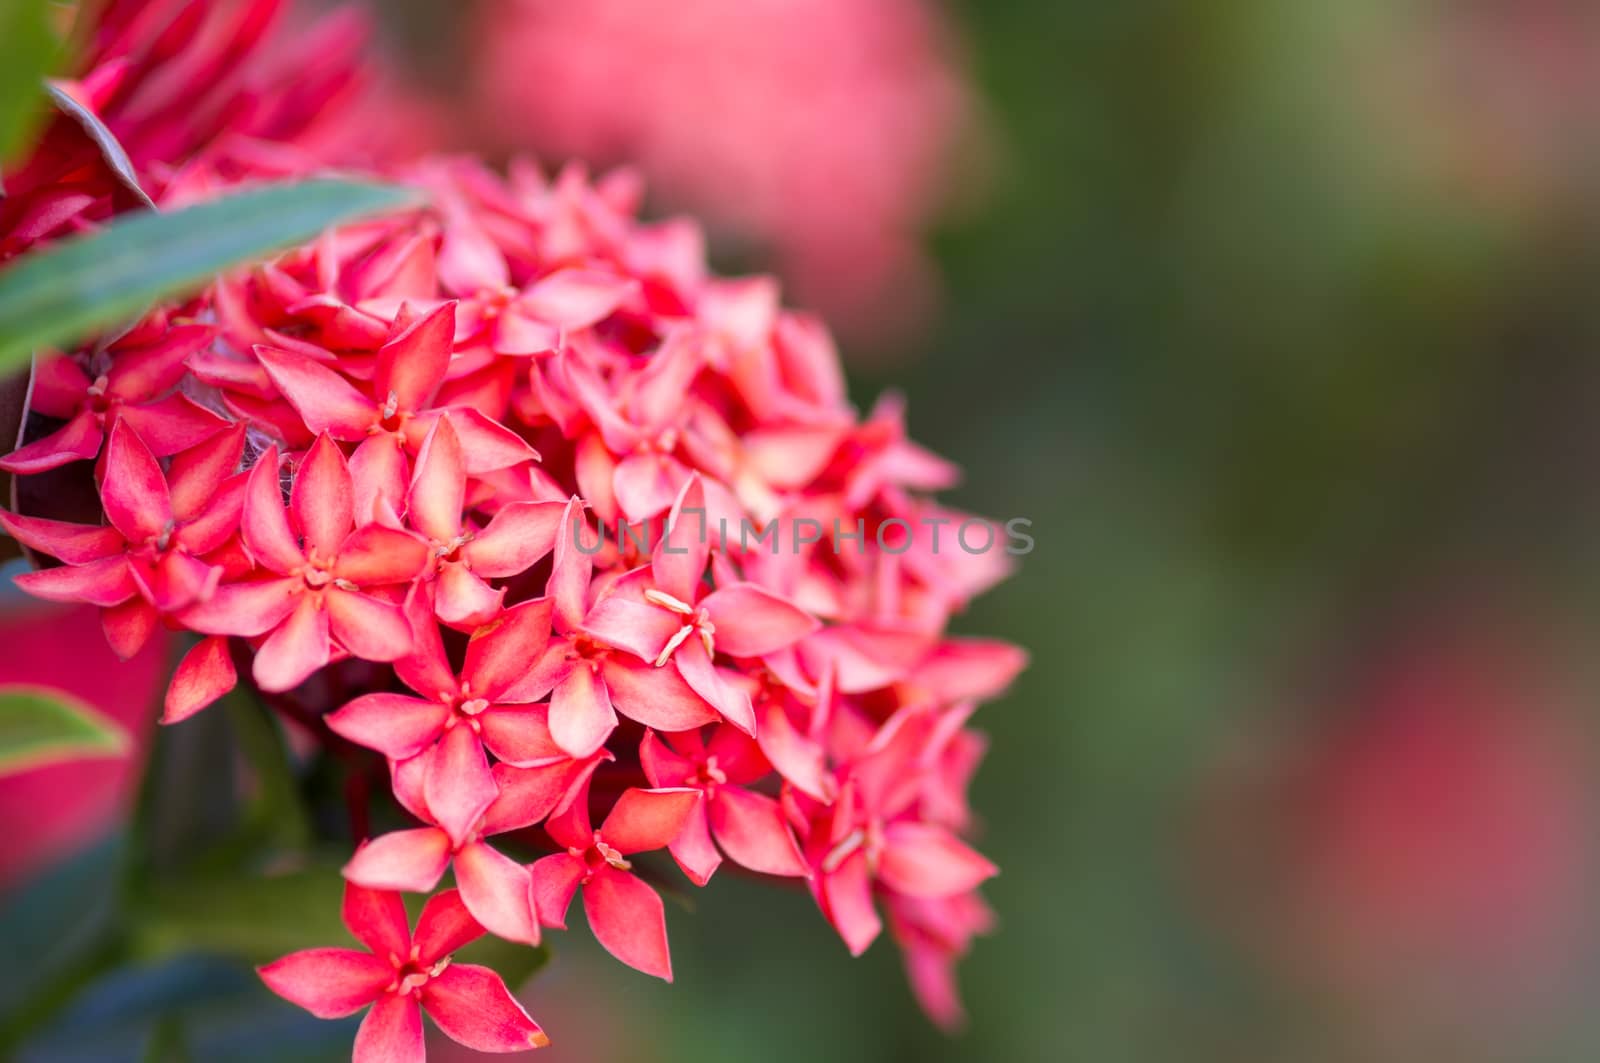 Rubiaceae flowers on blur background.